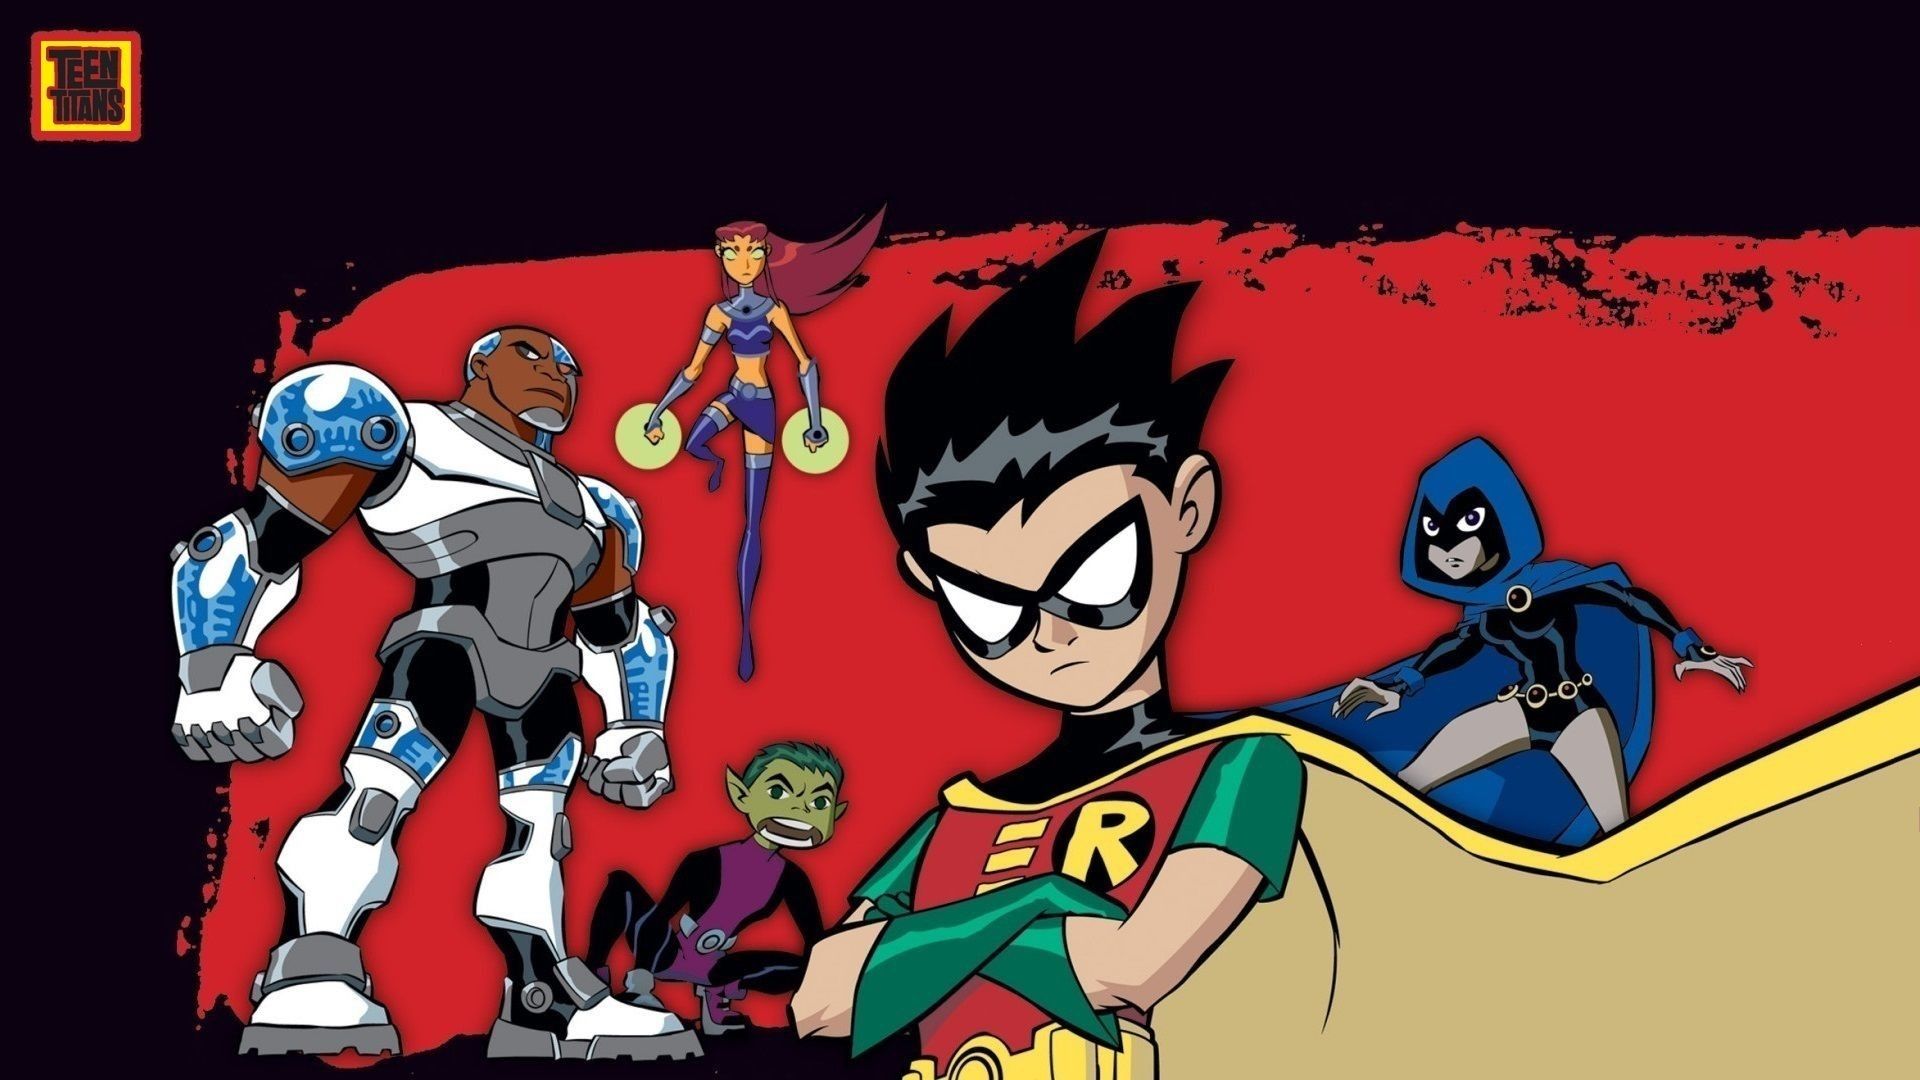 Teen Titans Wallpaper Free Teen Titans Background